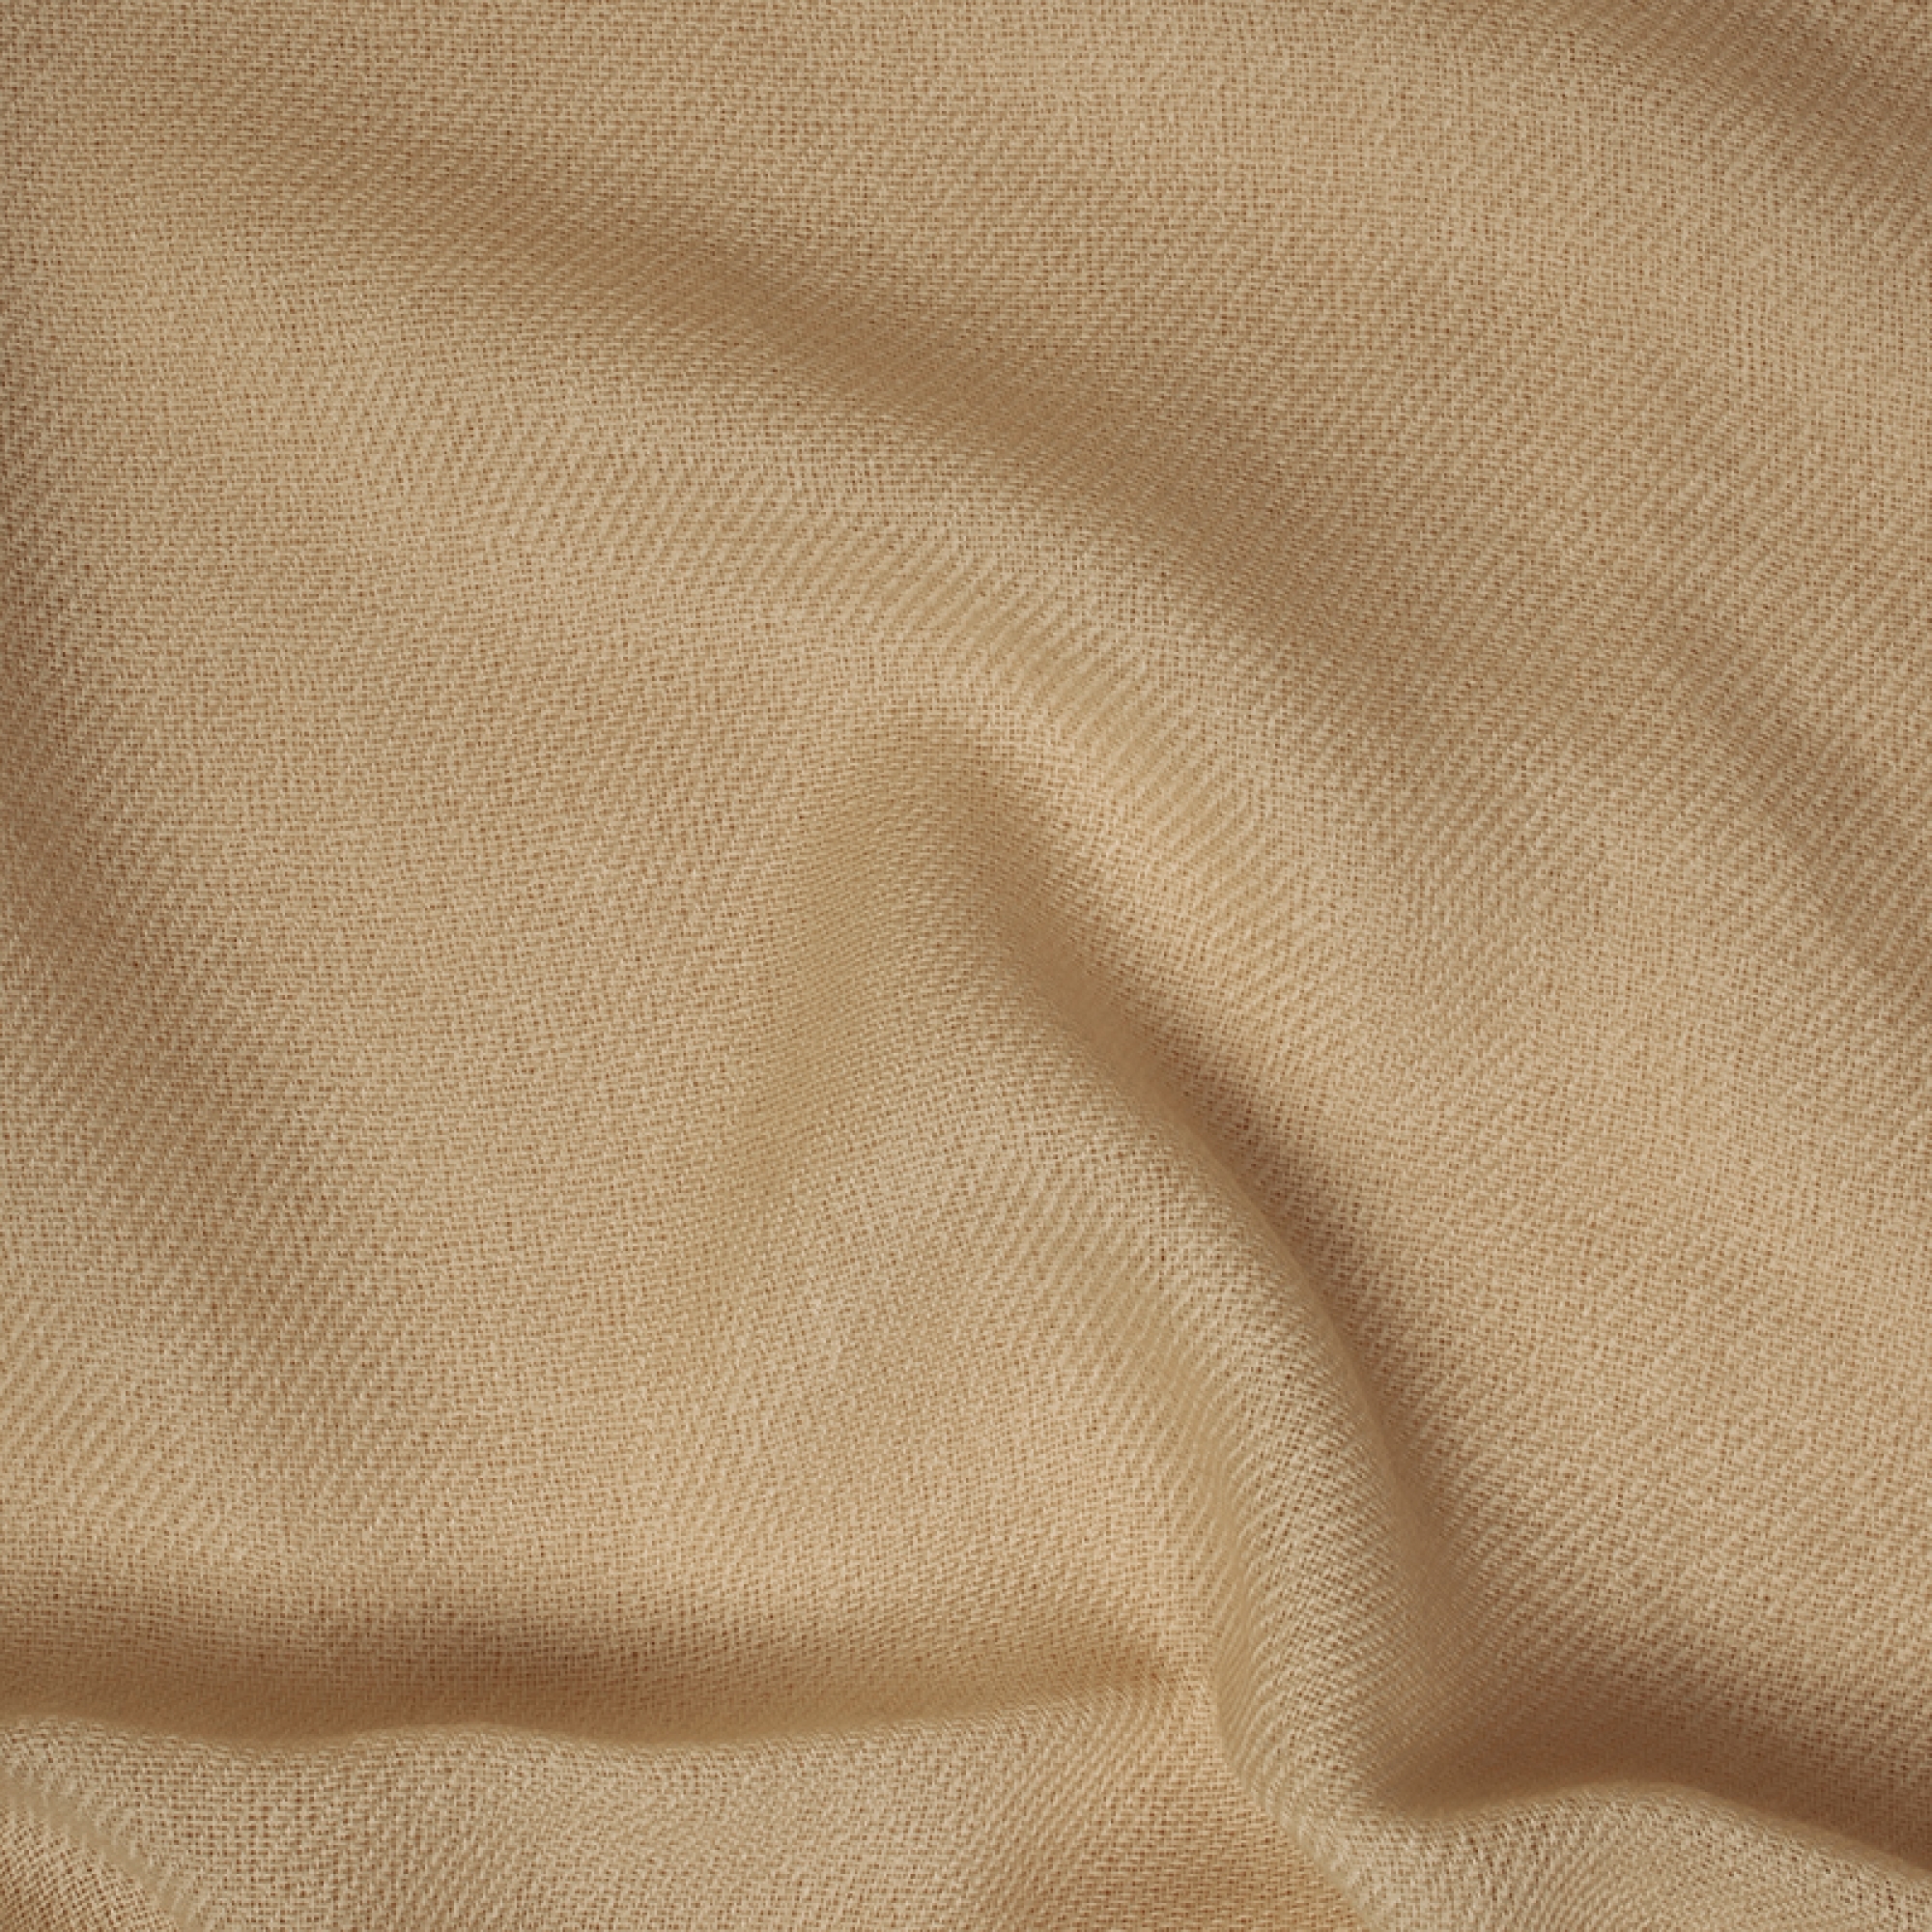 Cashmere accessories blanket toodoo plain m 180 x 220 white smocke 180 x 220 cm